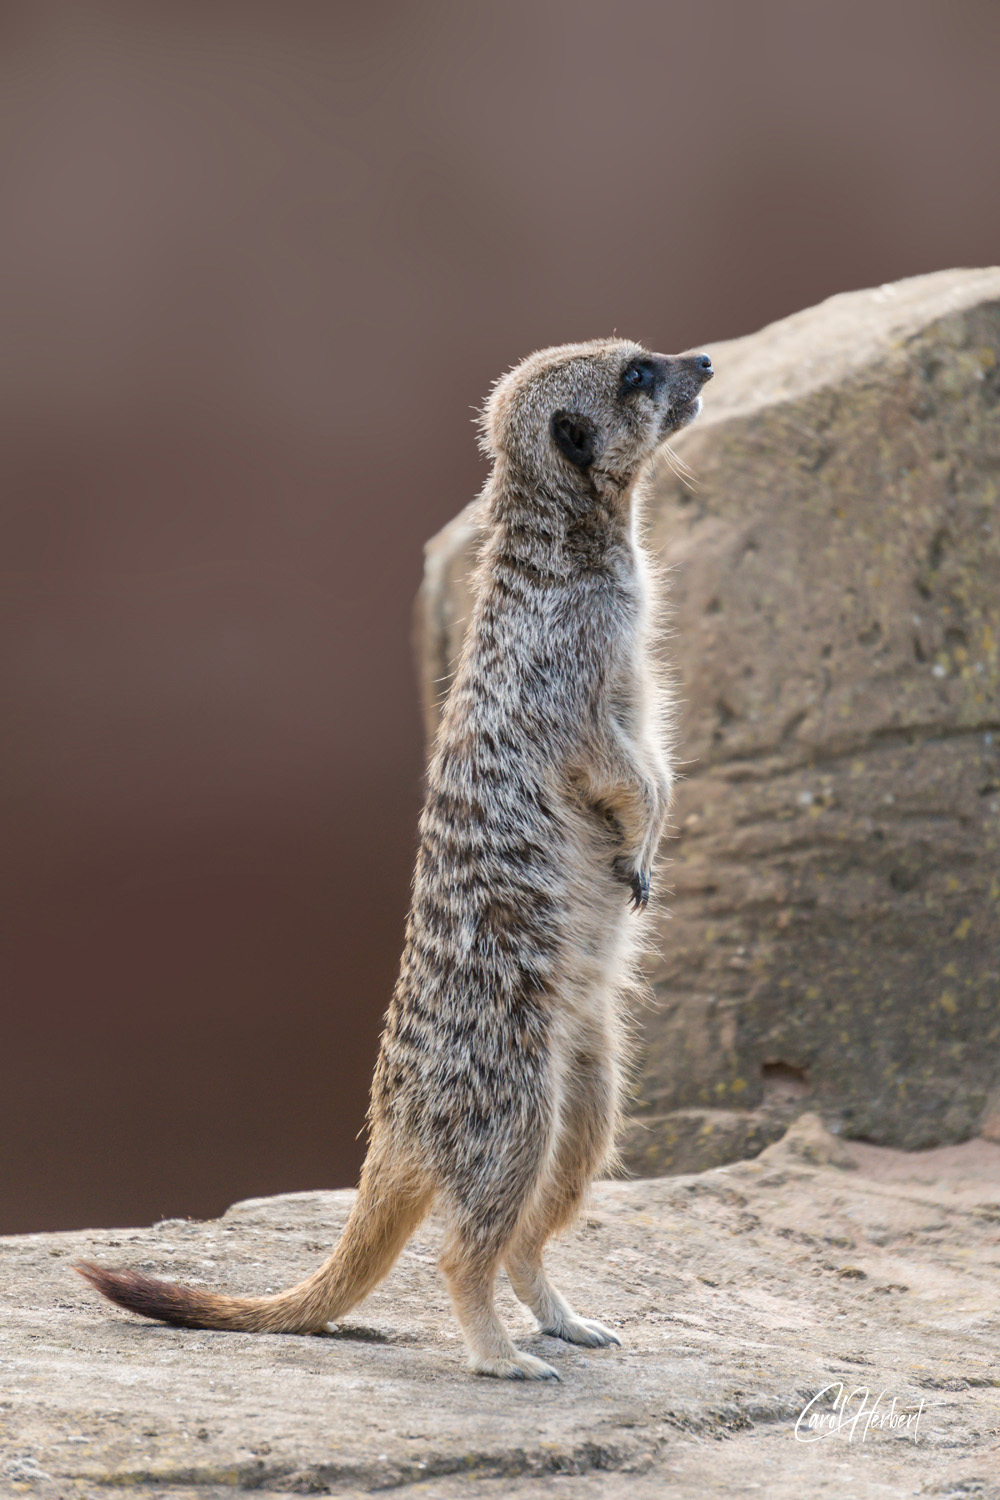 Photograph of a Meerkat